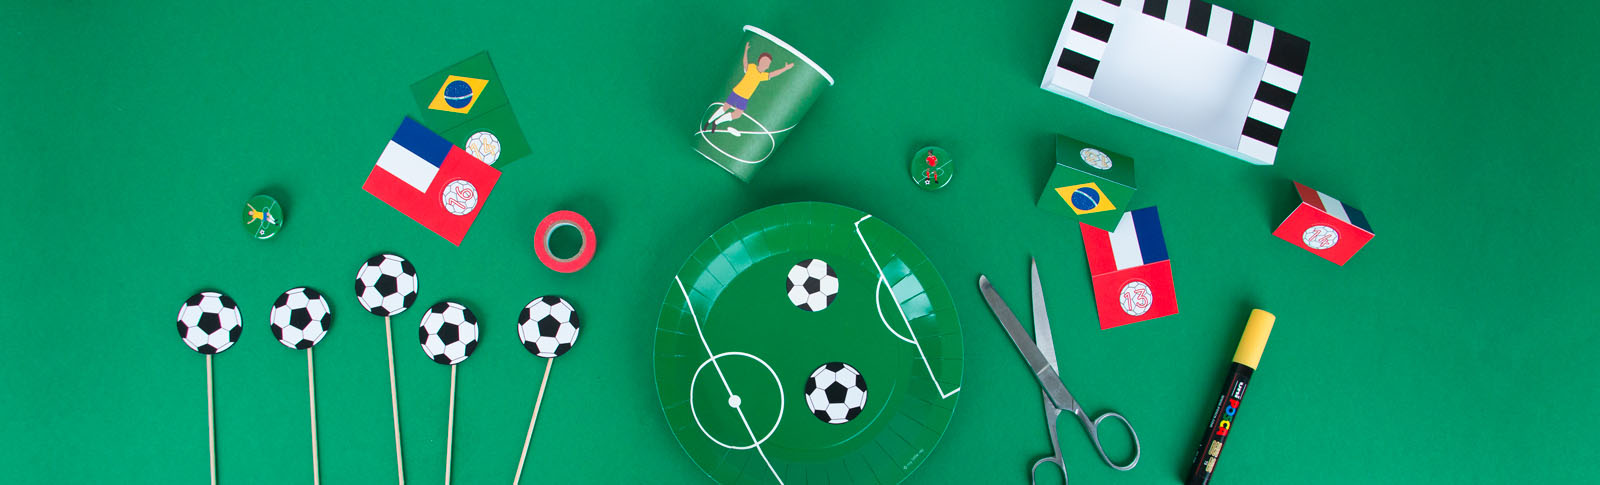 Ideas for children's birthday activities football theme